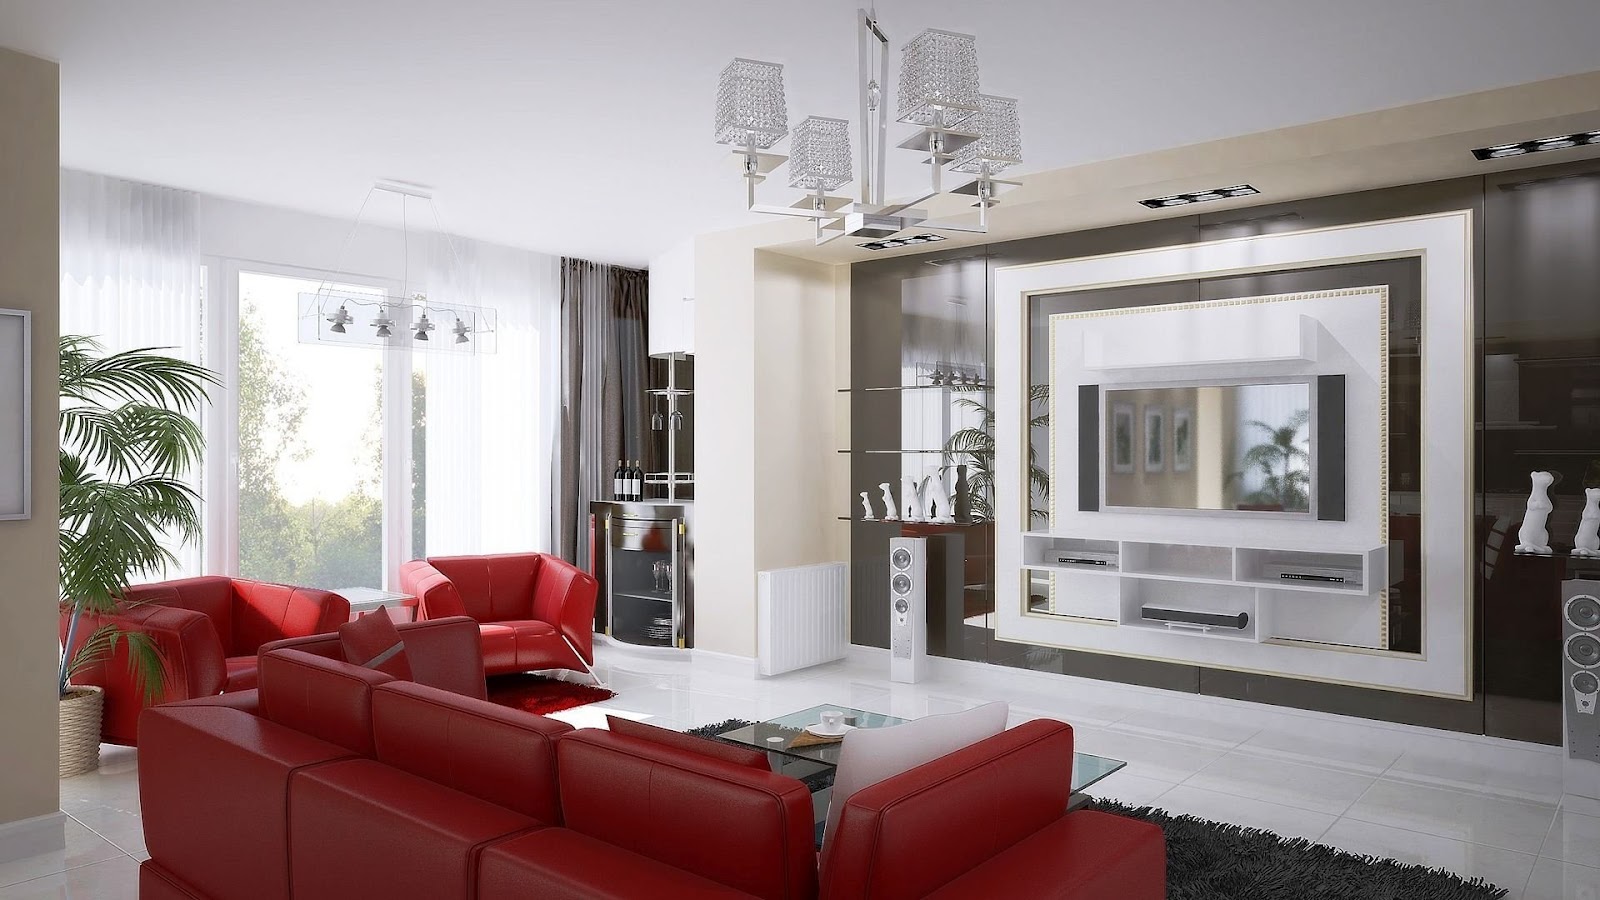 best living room wallpaper designs - www.high-definition-wallpaper.com